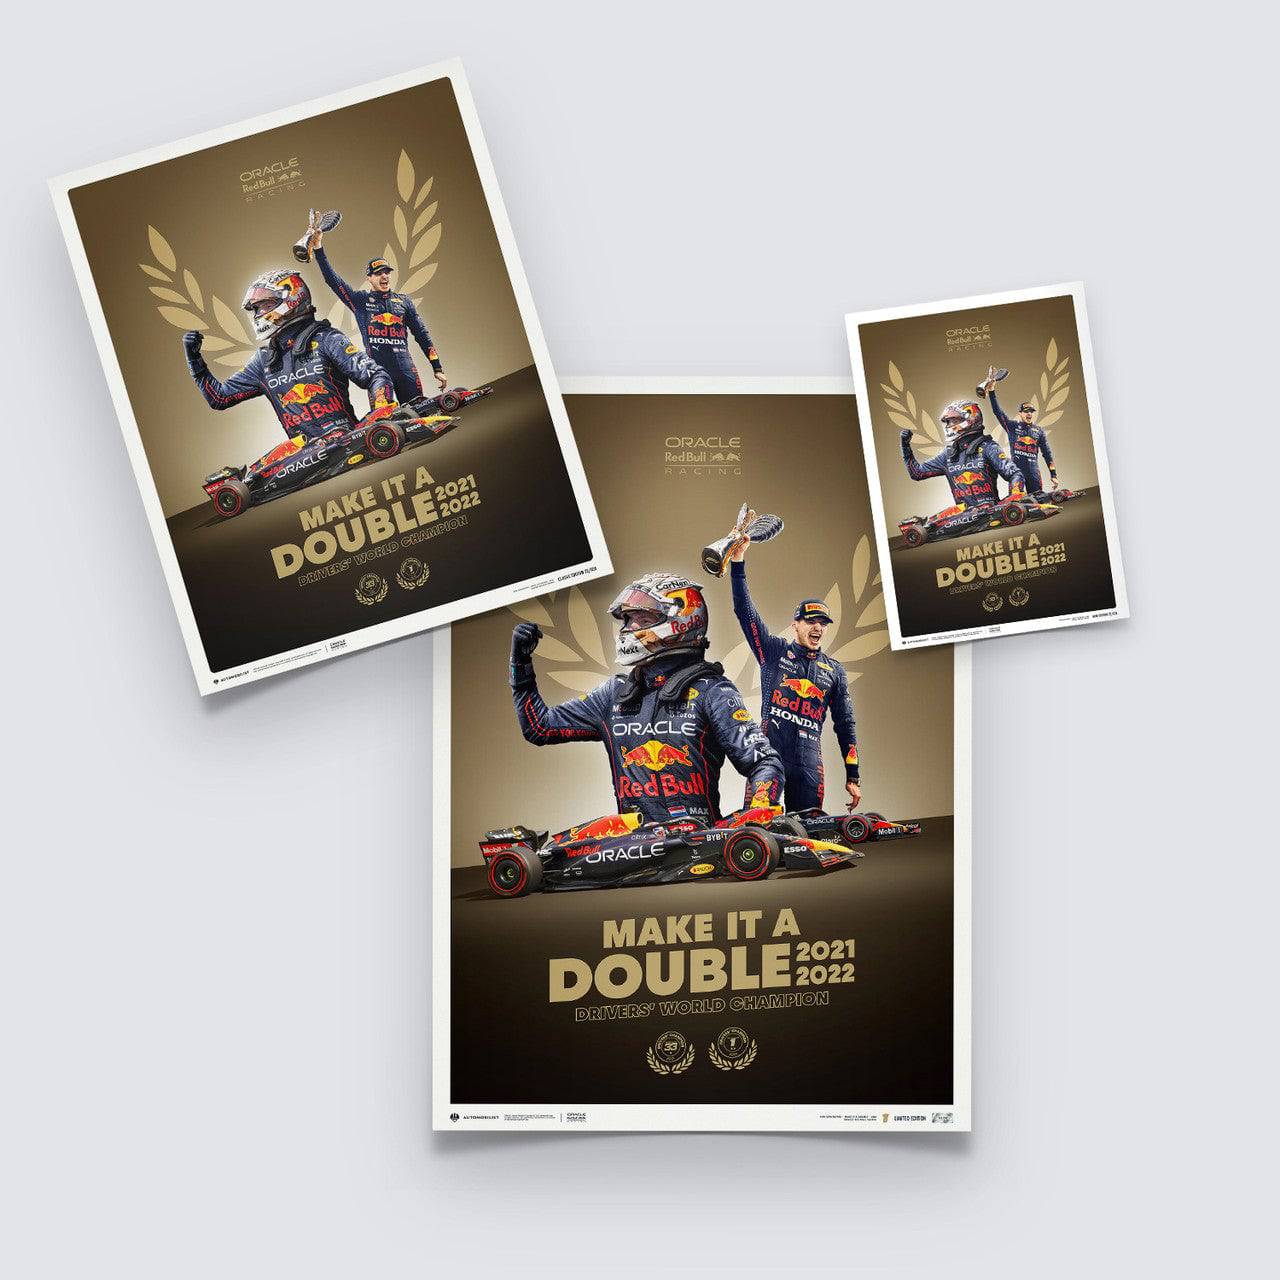 Max Verstappen 2023 - Max Verstappen Poster #16 - 50x70cm